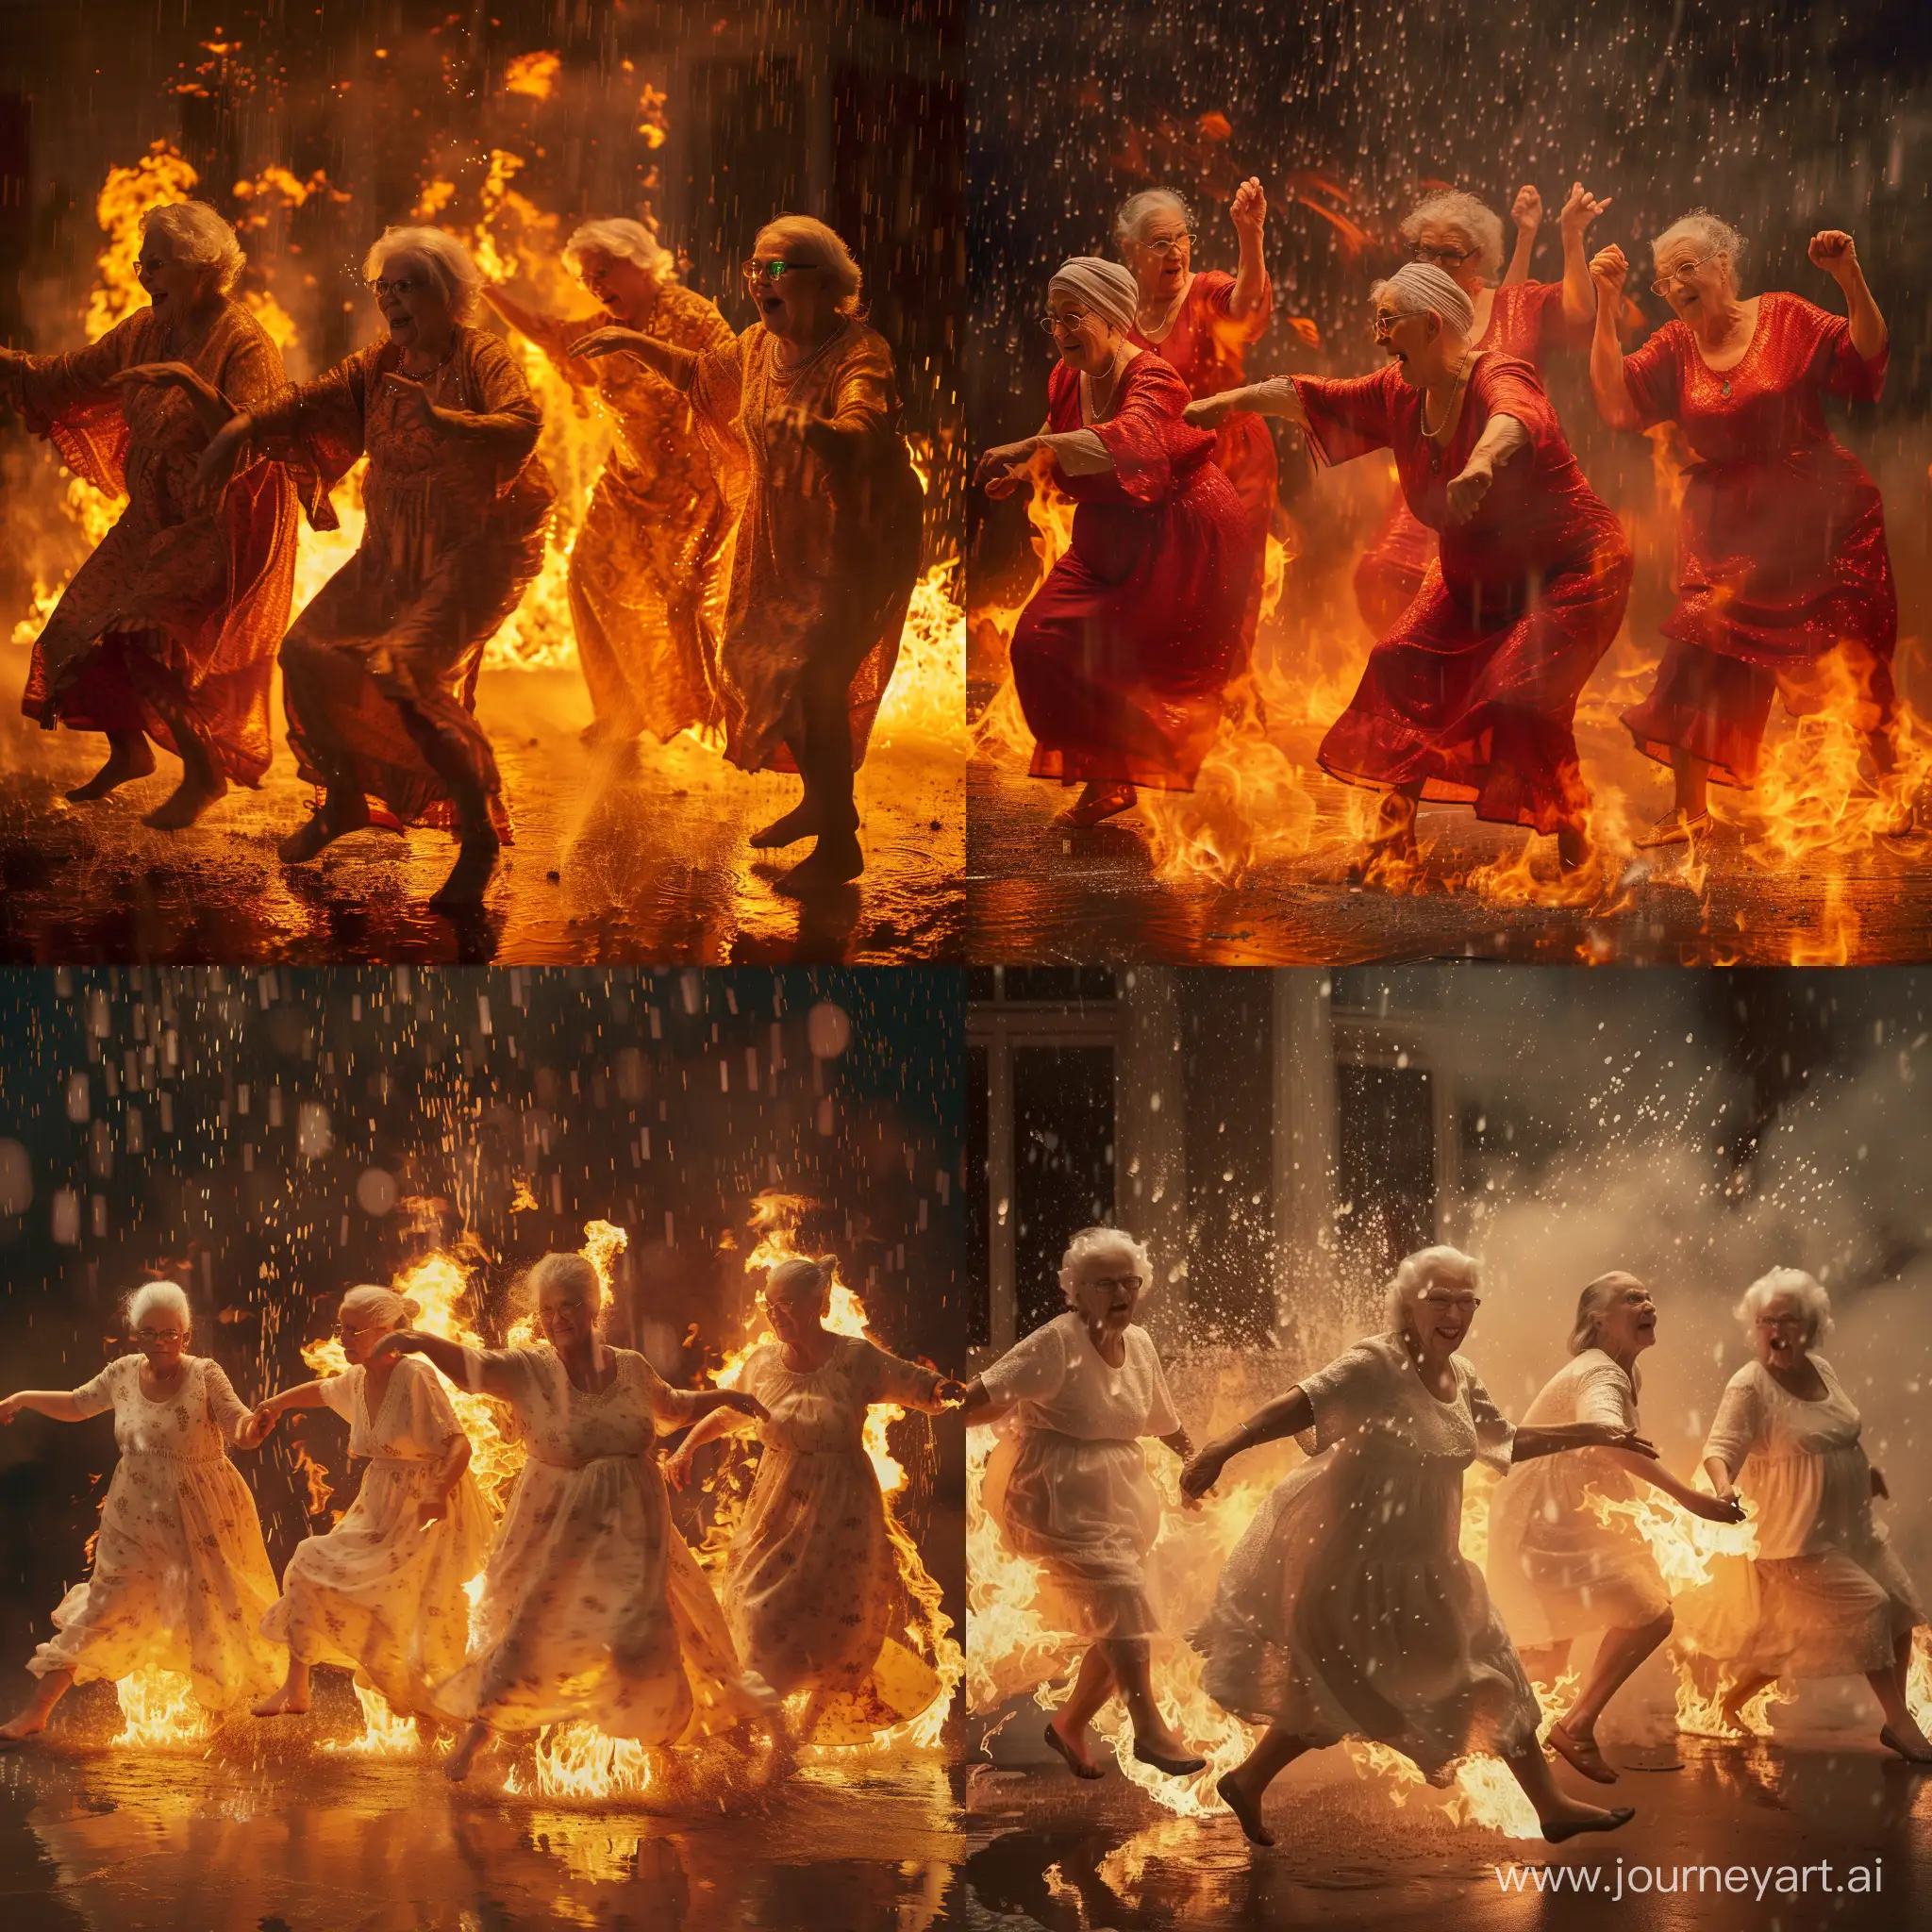 5 grandmas dancing under fire rain, dramatic, action